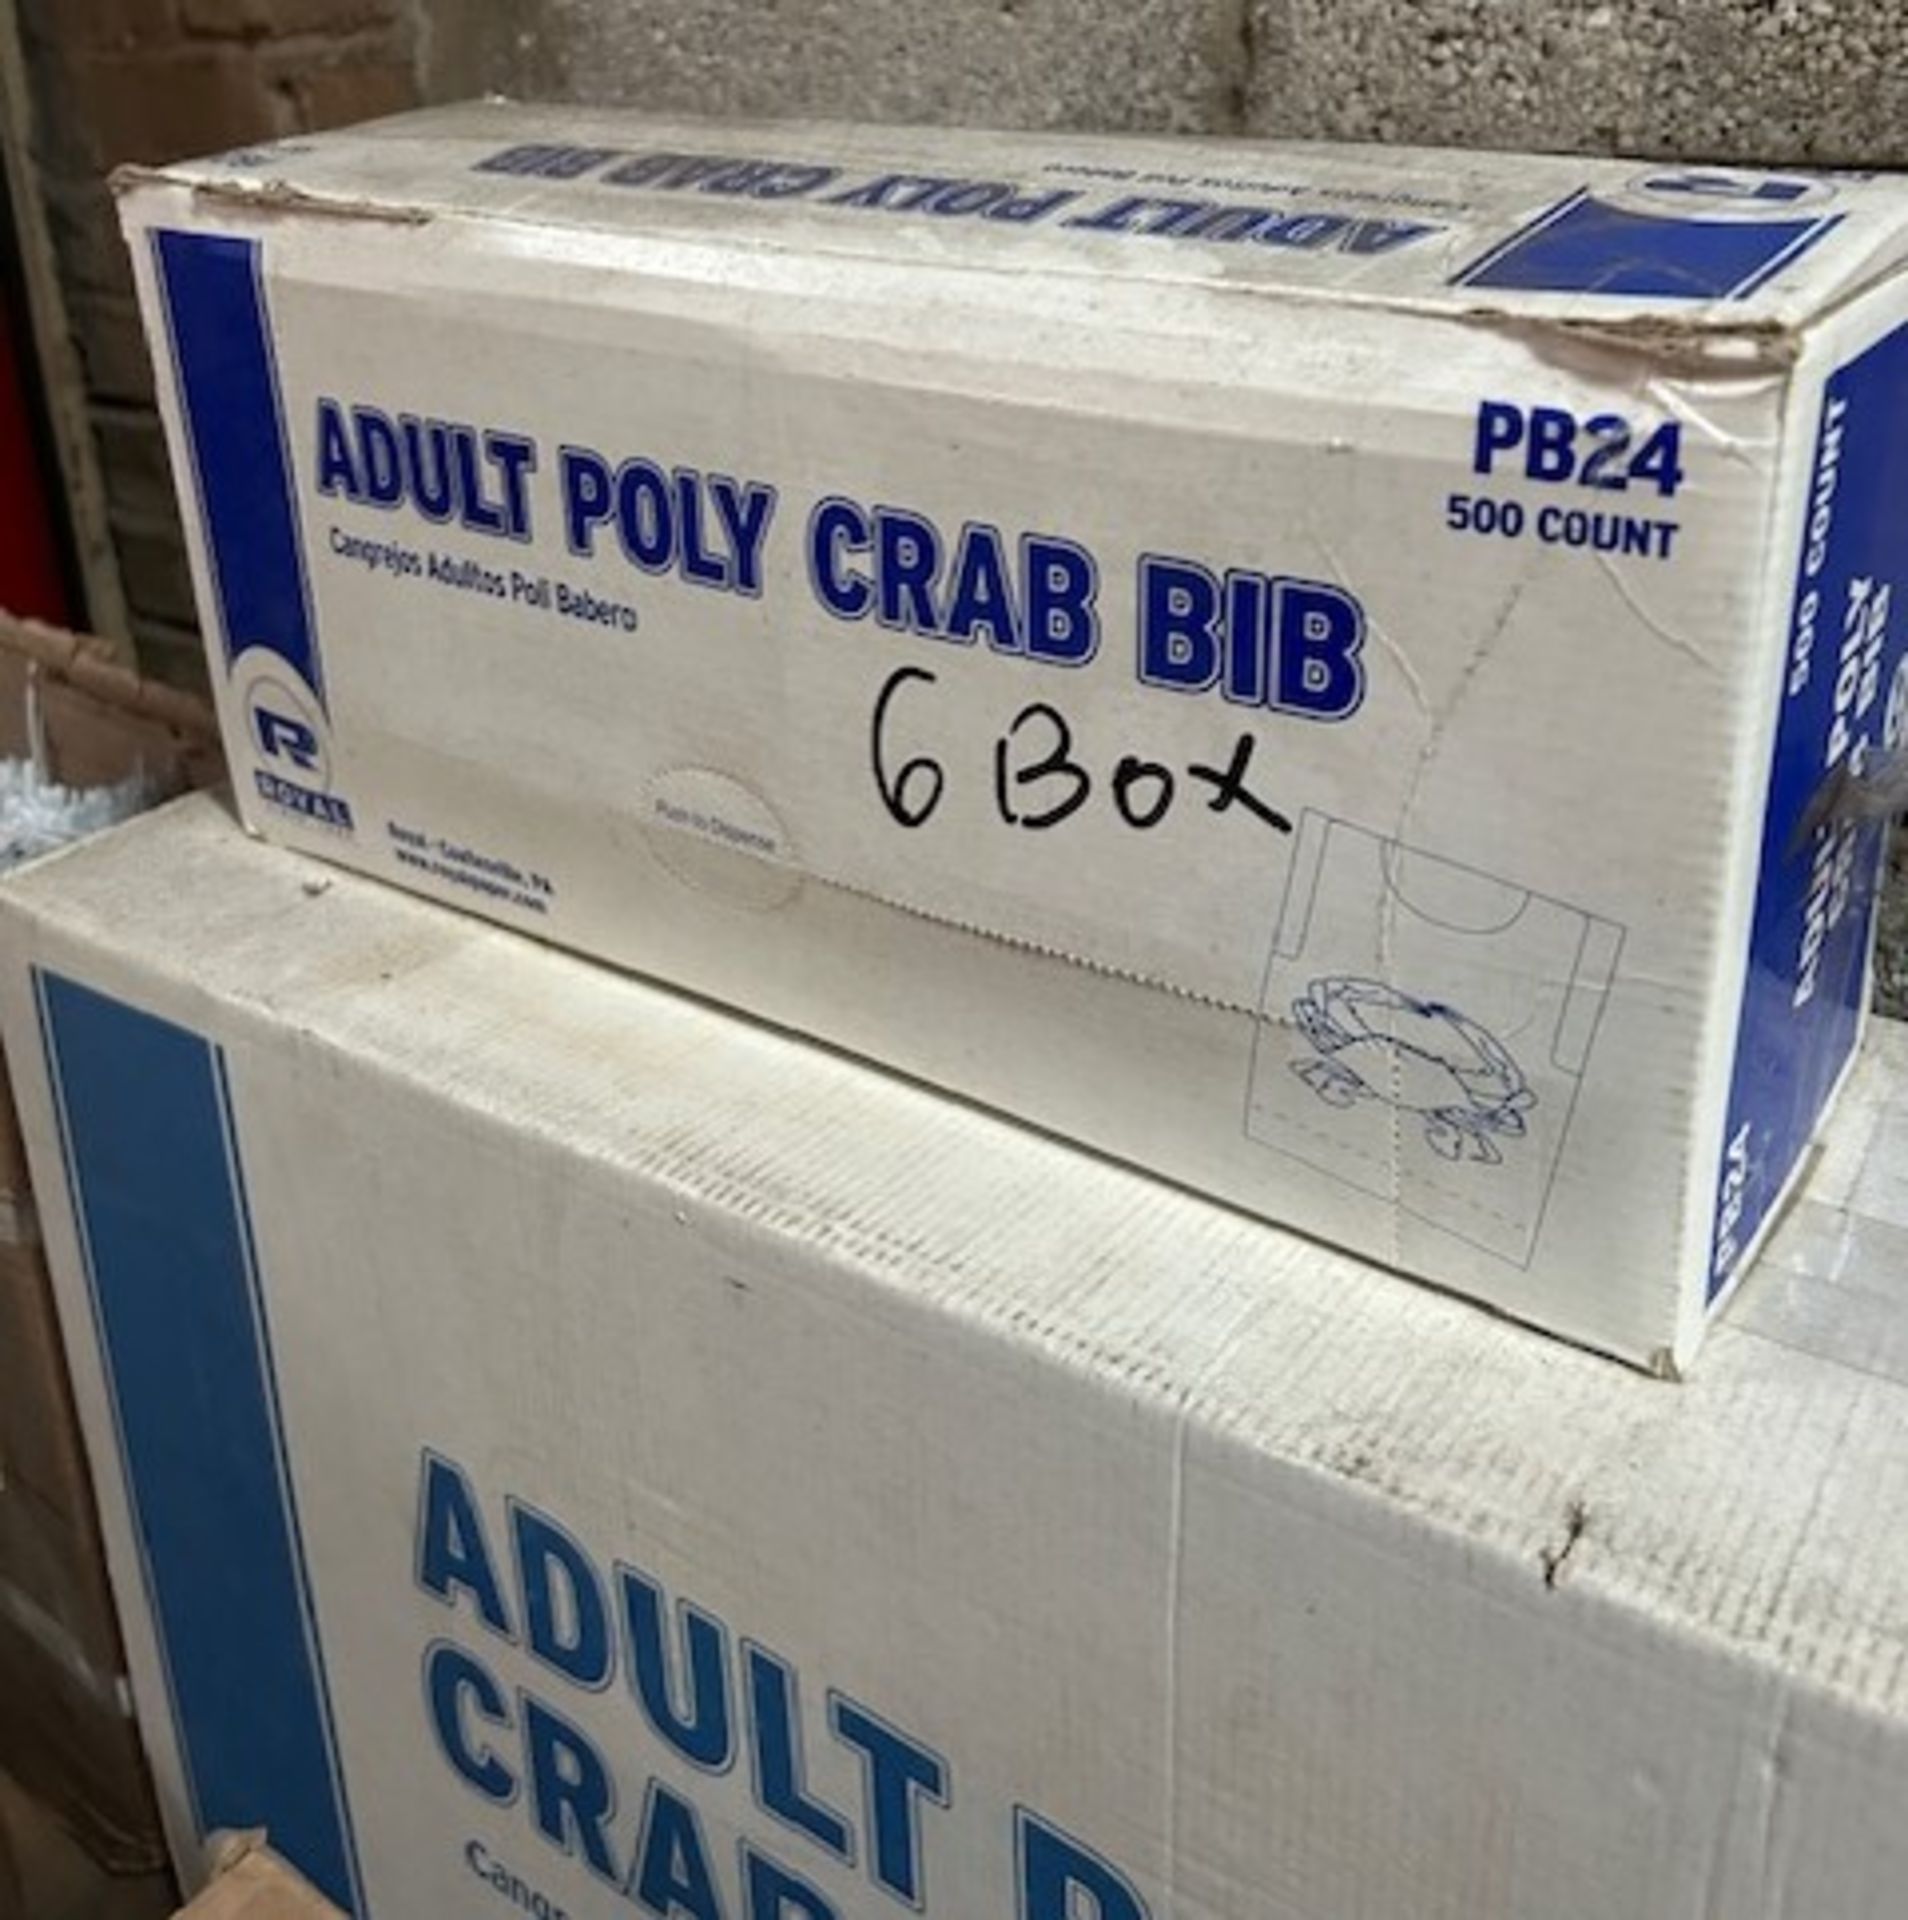 (6) Boxes - PB24 Adult Poly Crab Bib (Pack 500)